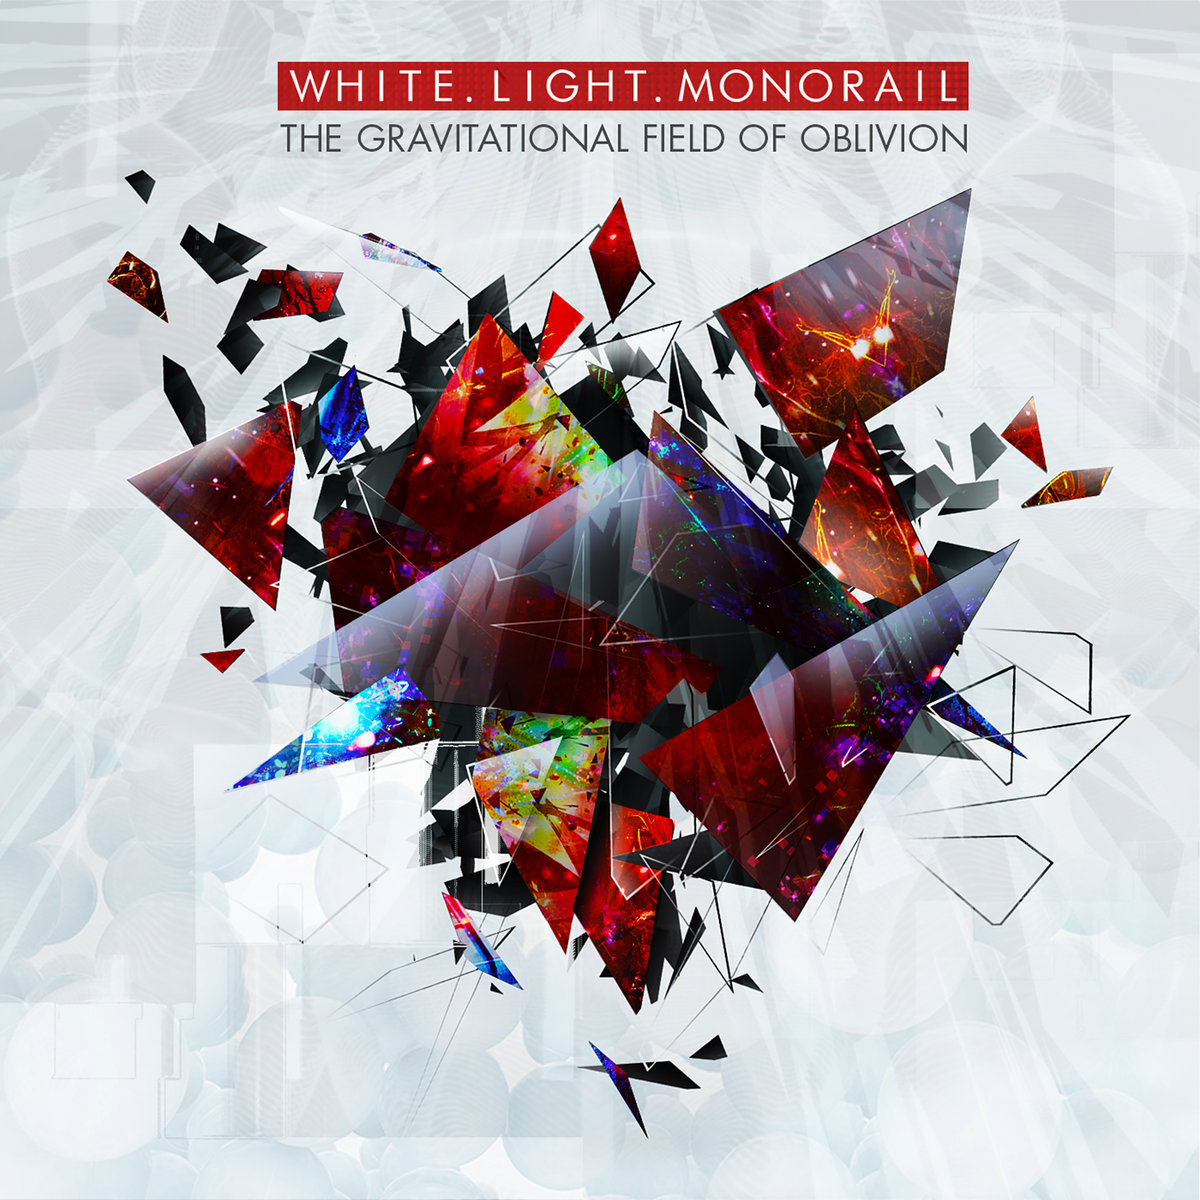 White Light Monorail, “The Gravitational Field Of Oblivion”